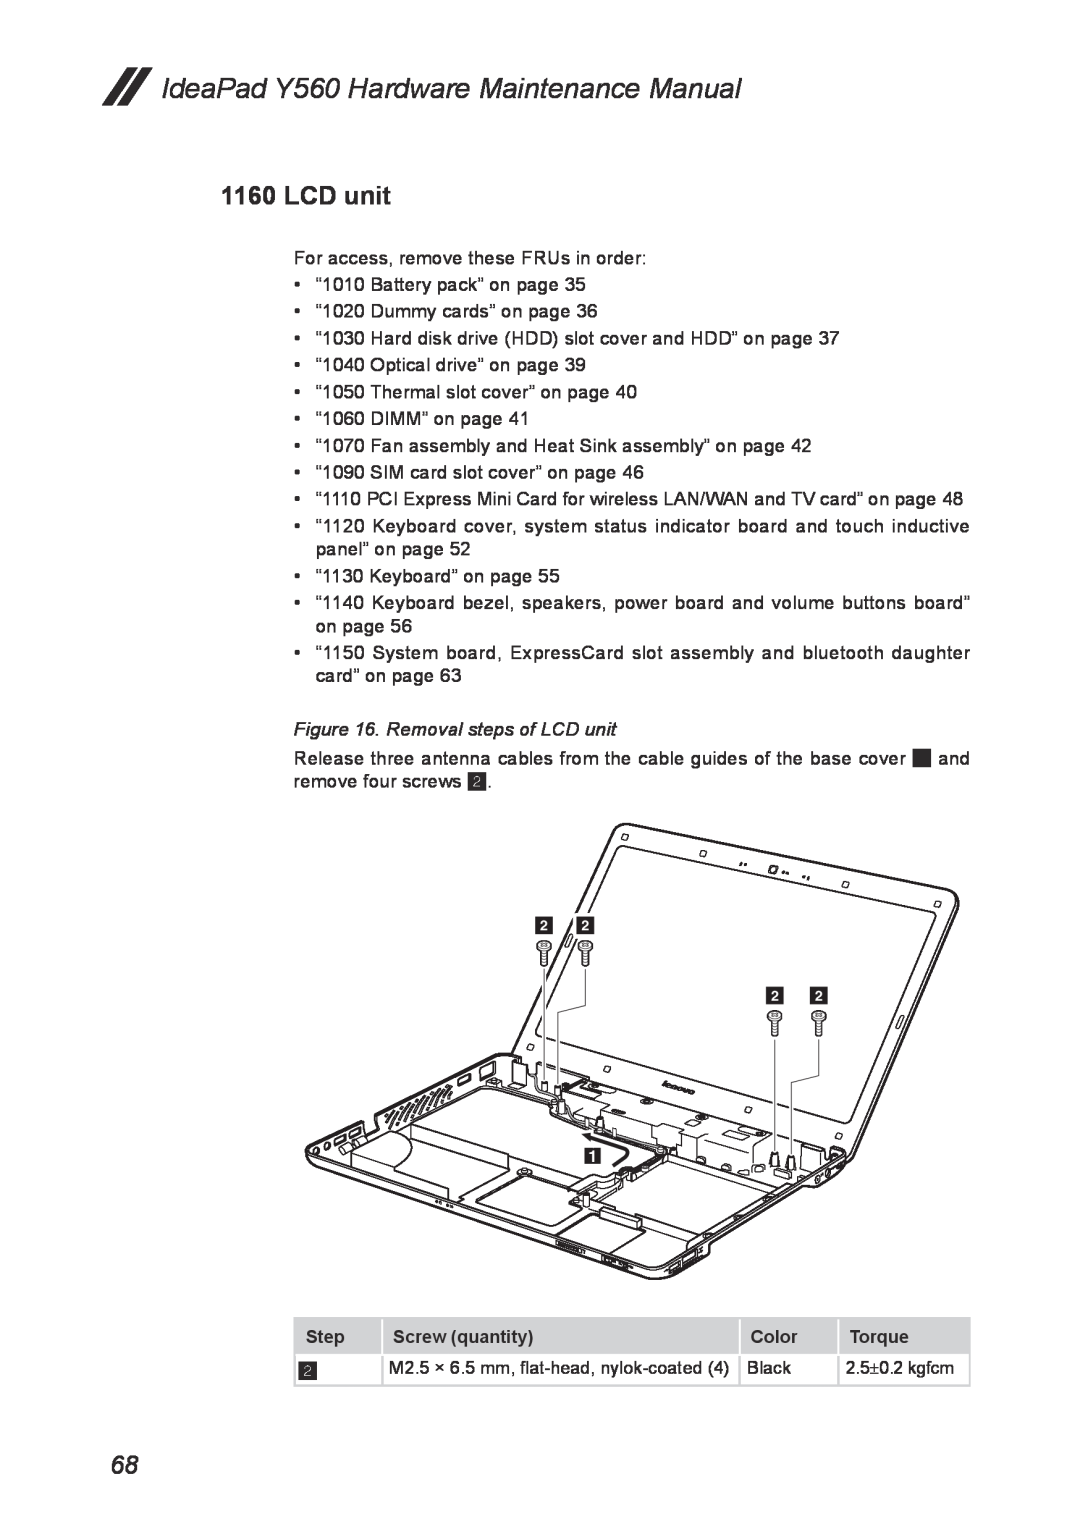 Lenovo manual Removal steps of LCD unit, IdeaPad Y560 Hardware Maintenance Manual 